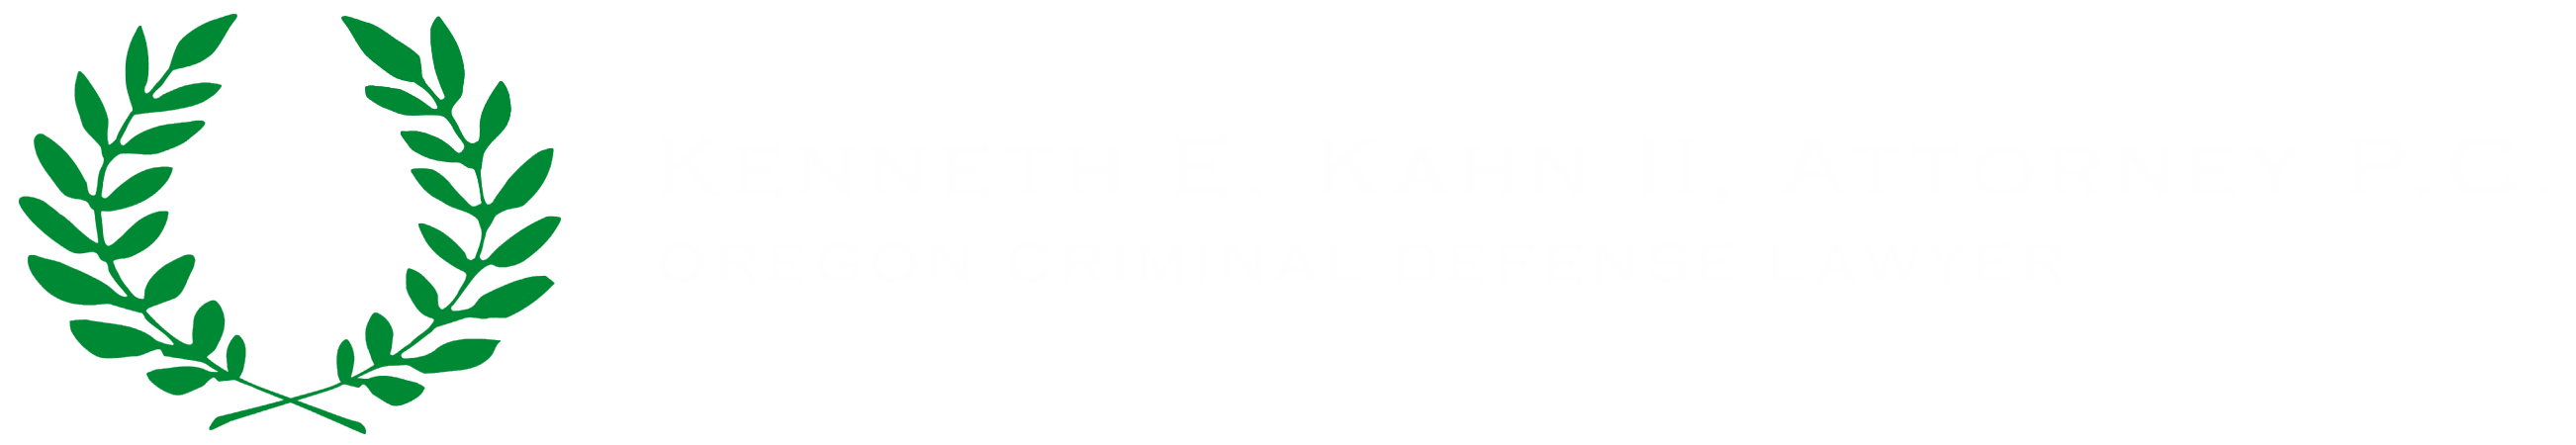 Kenneth E. Kahn II, Attorney P.C.